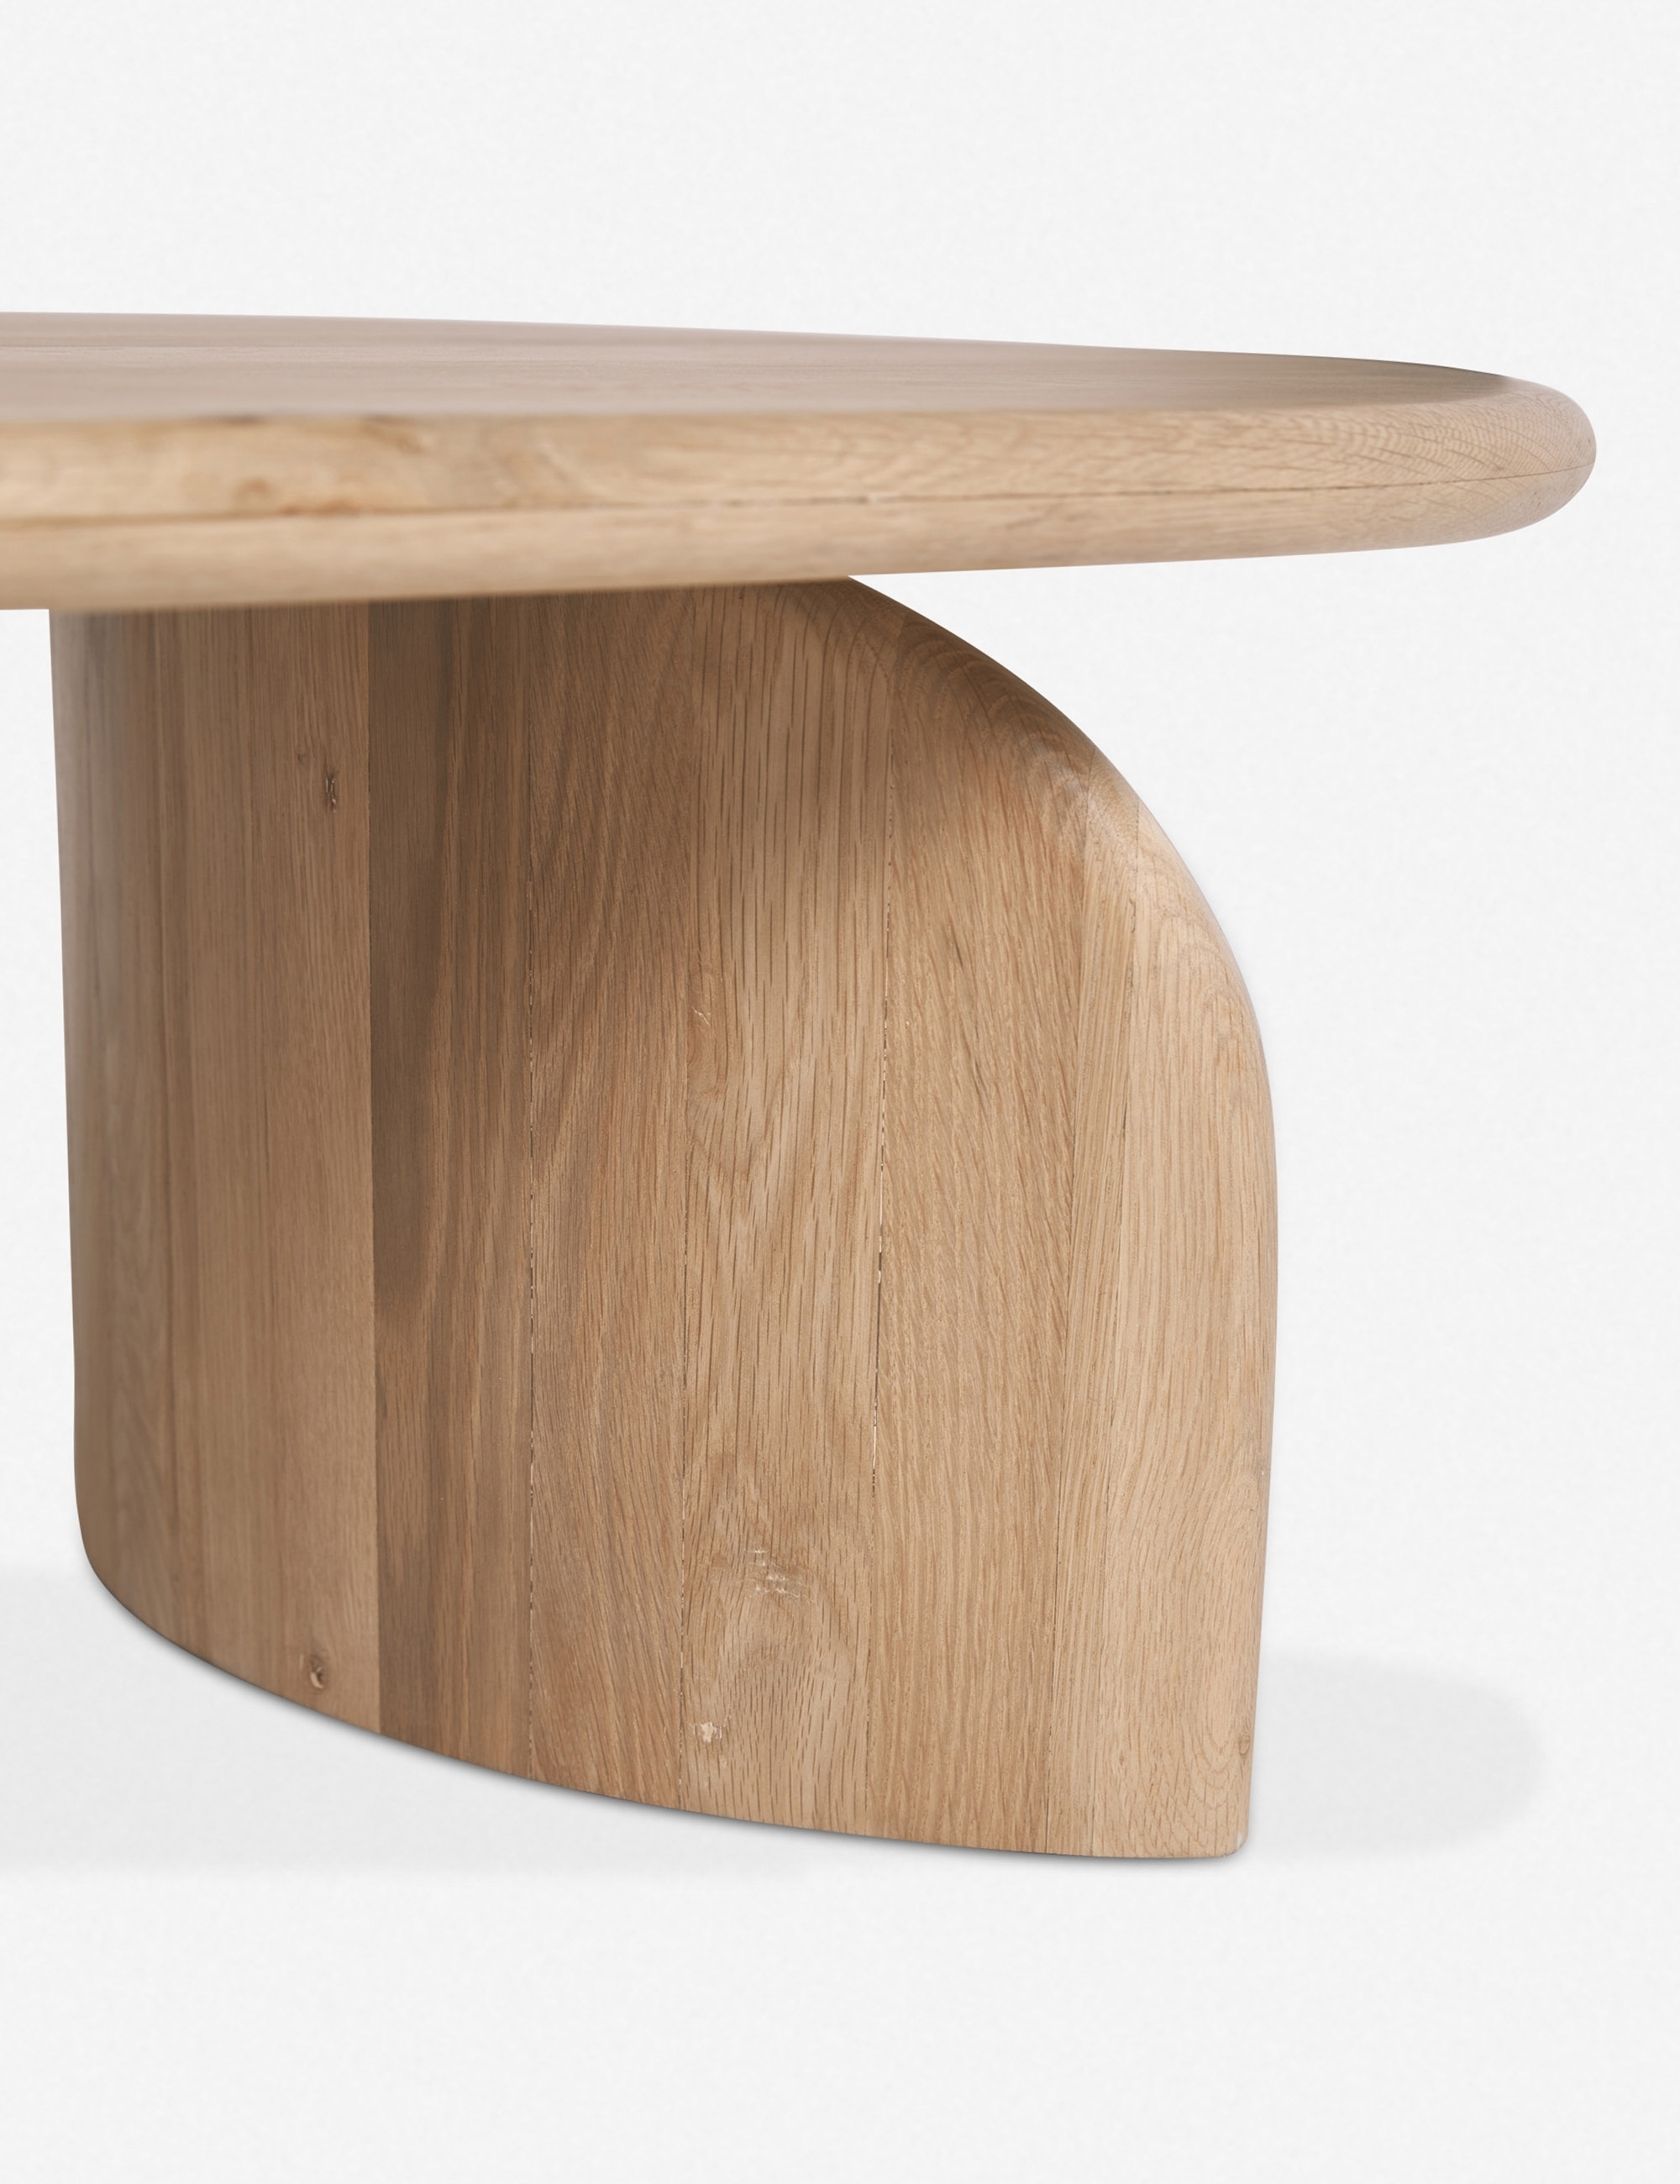 Ada Oval Coffee Table - Image 6